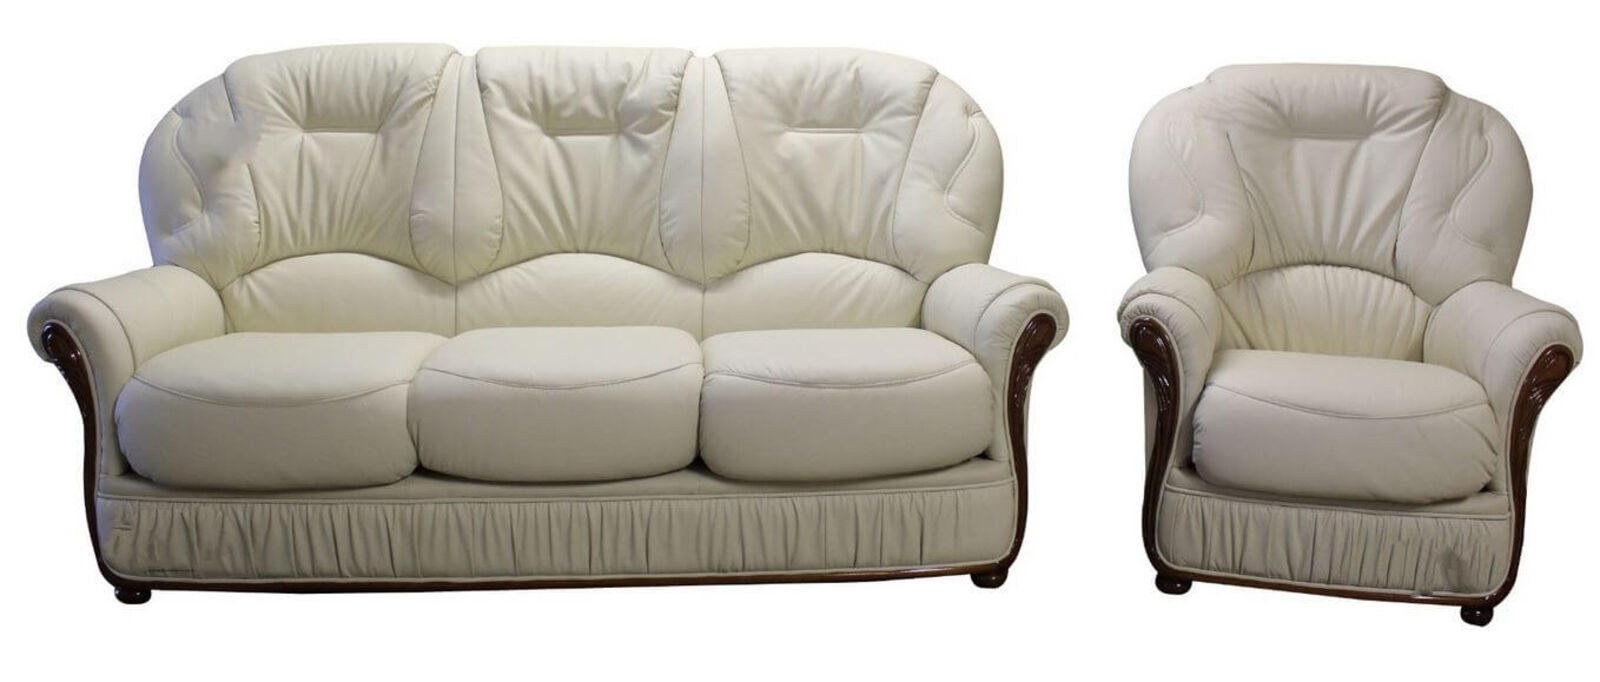 Product photograph of Debora 3 Seater Armchair Genuine Italian Cream Leather Sofa Suite Offer from Designer Sofas 4U